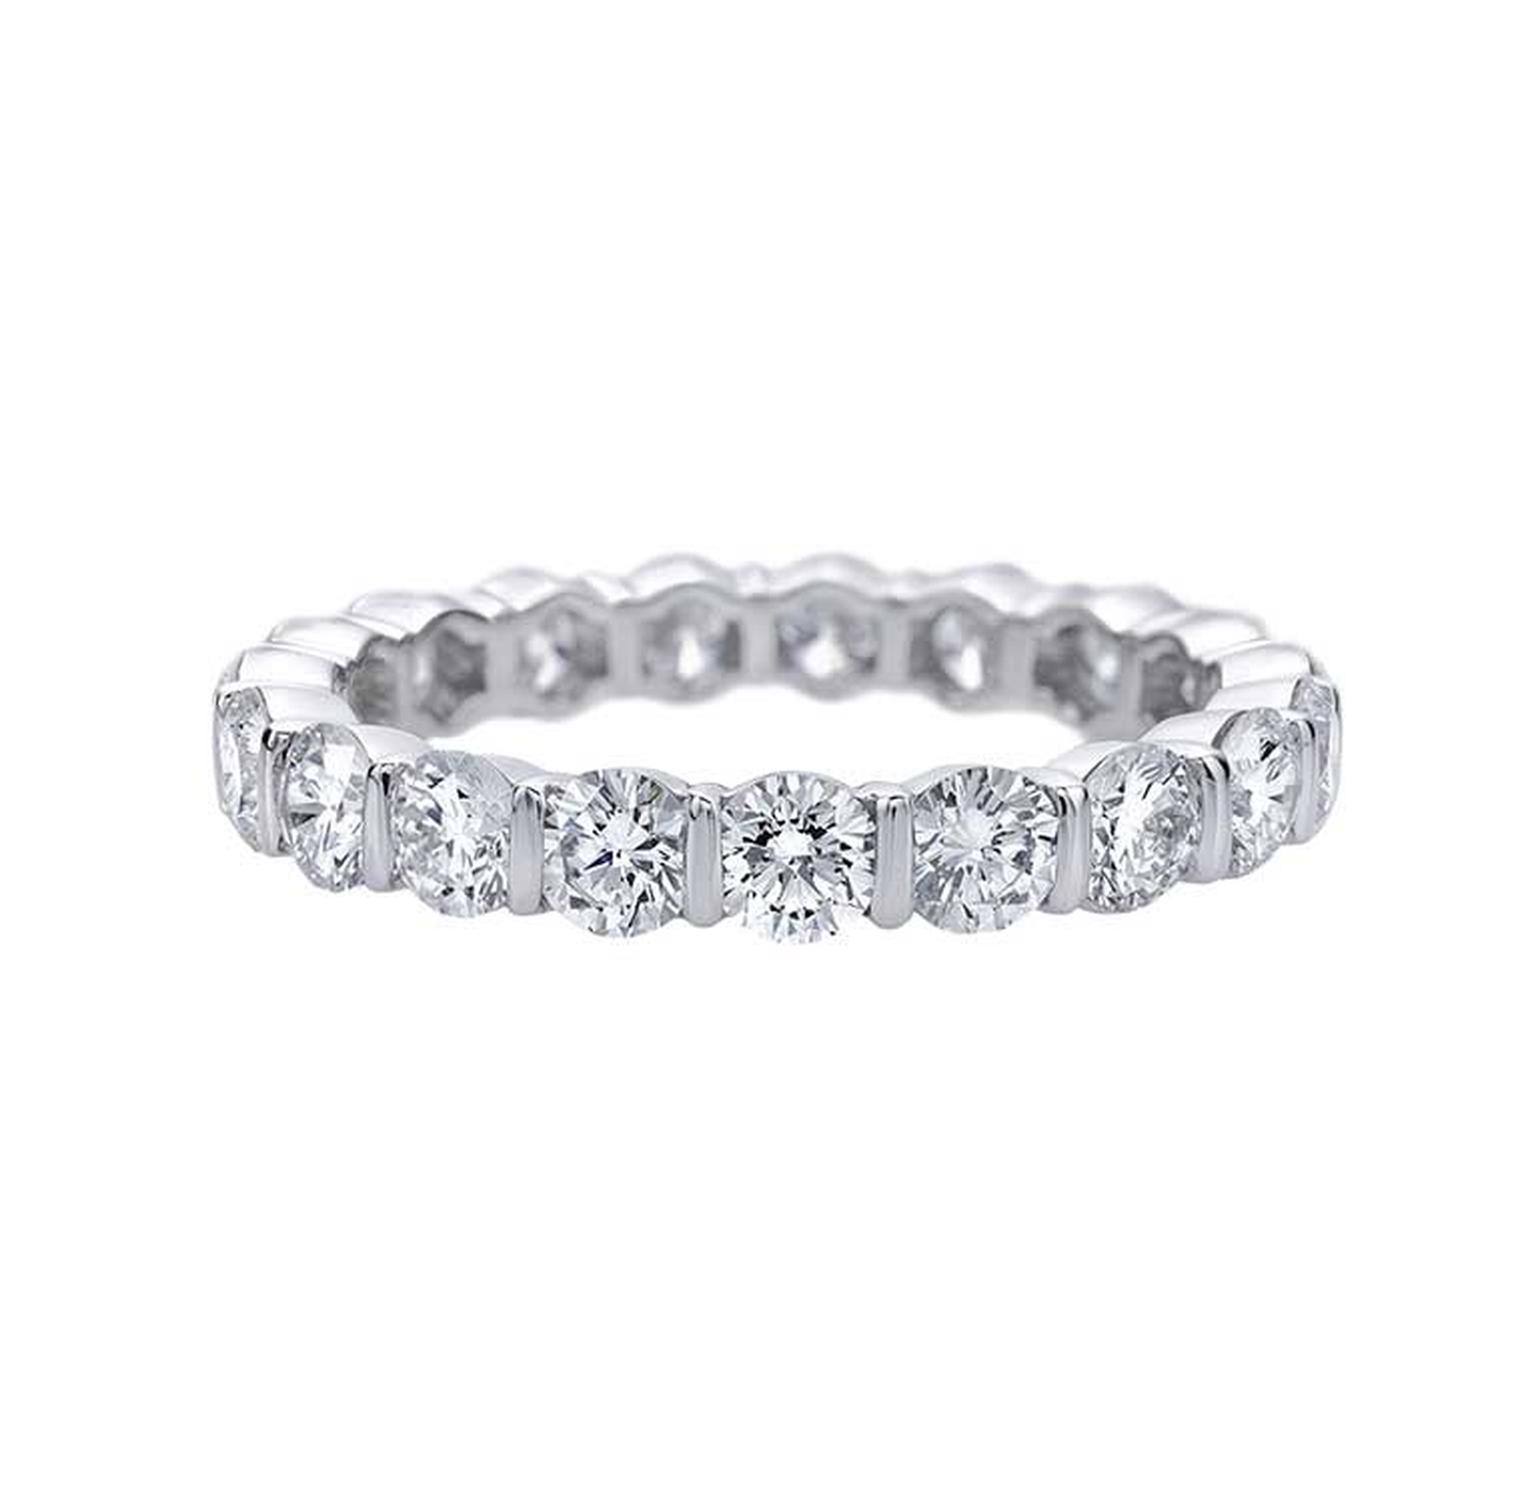 Harry Winston Bar-Set diamond eternity ring in platinum, set with 19 round brilliant diamonds weighing 2.02ct.